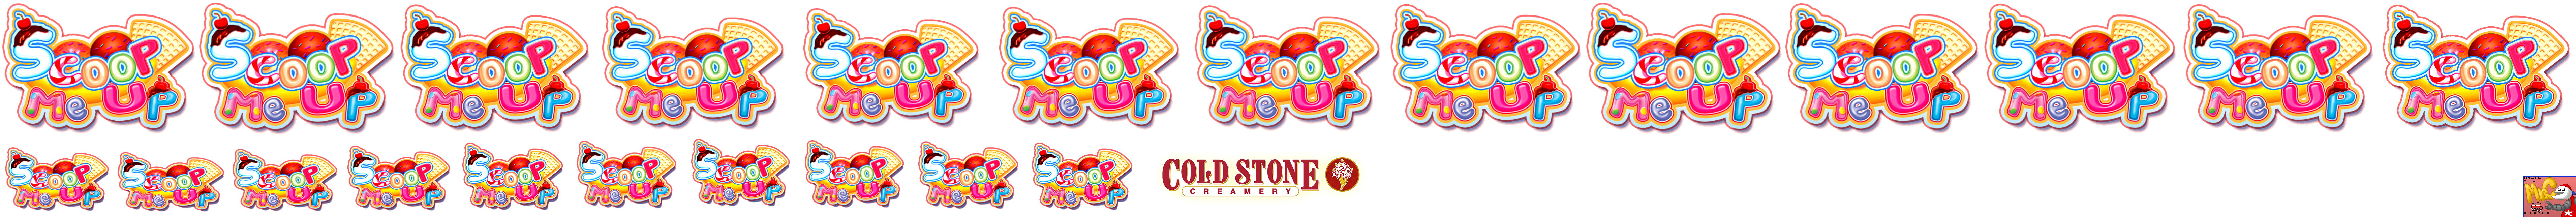 Cold Stone Creamery: Scoop It Up - Unused Game Logo